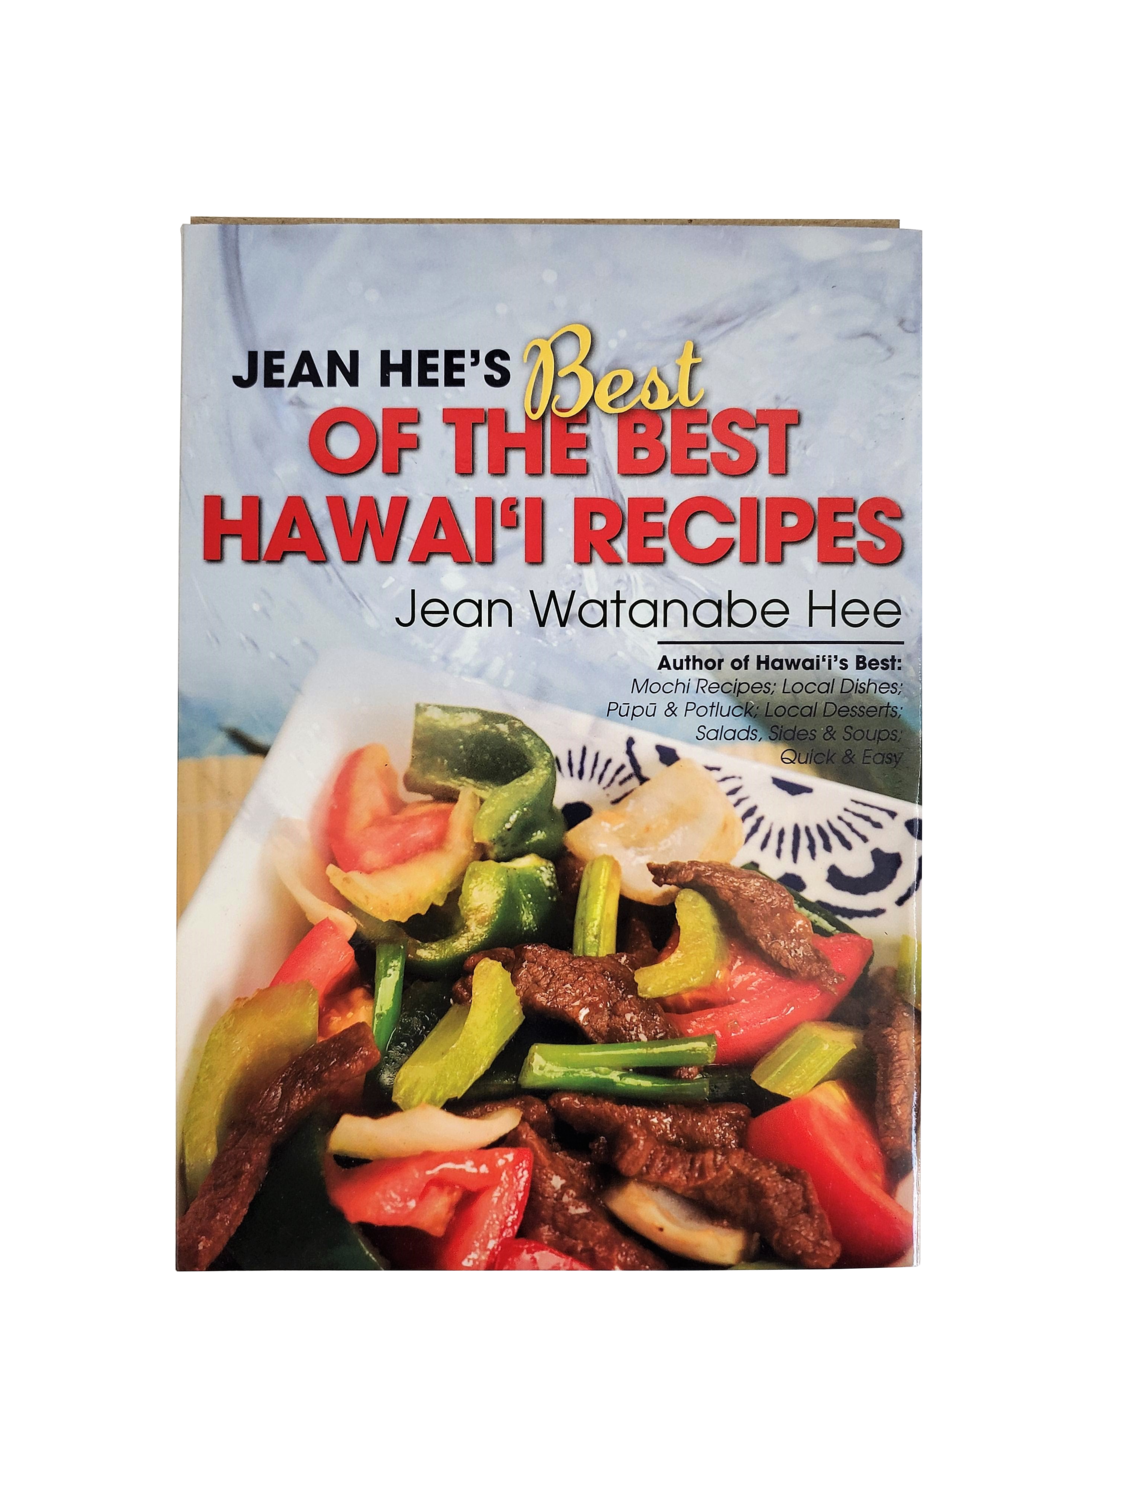 Cookbook - Jean Hee's Best of the Best Hawaii Recipes